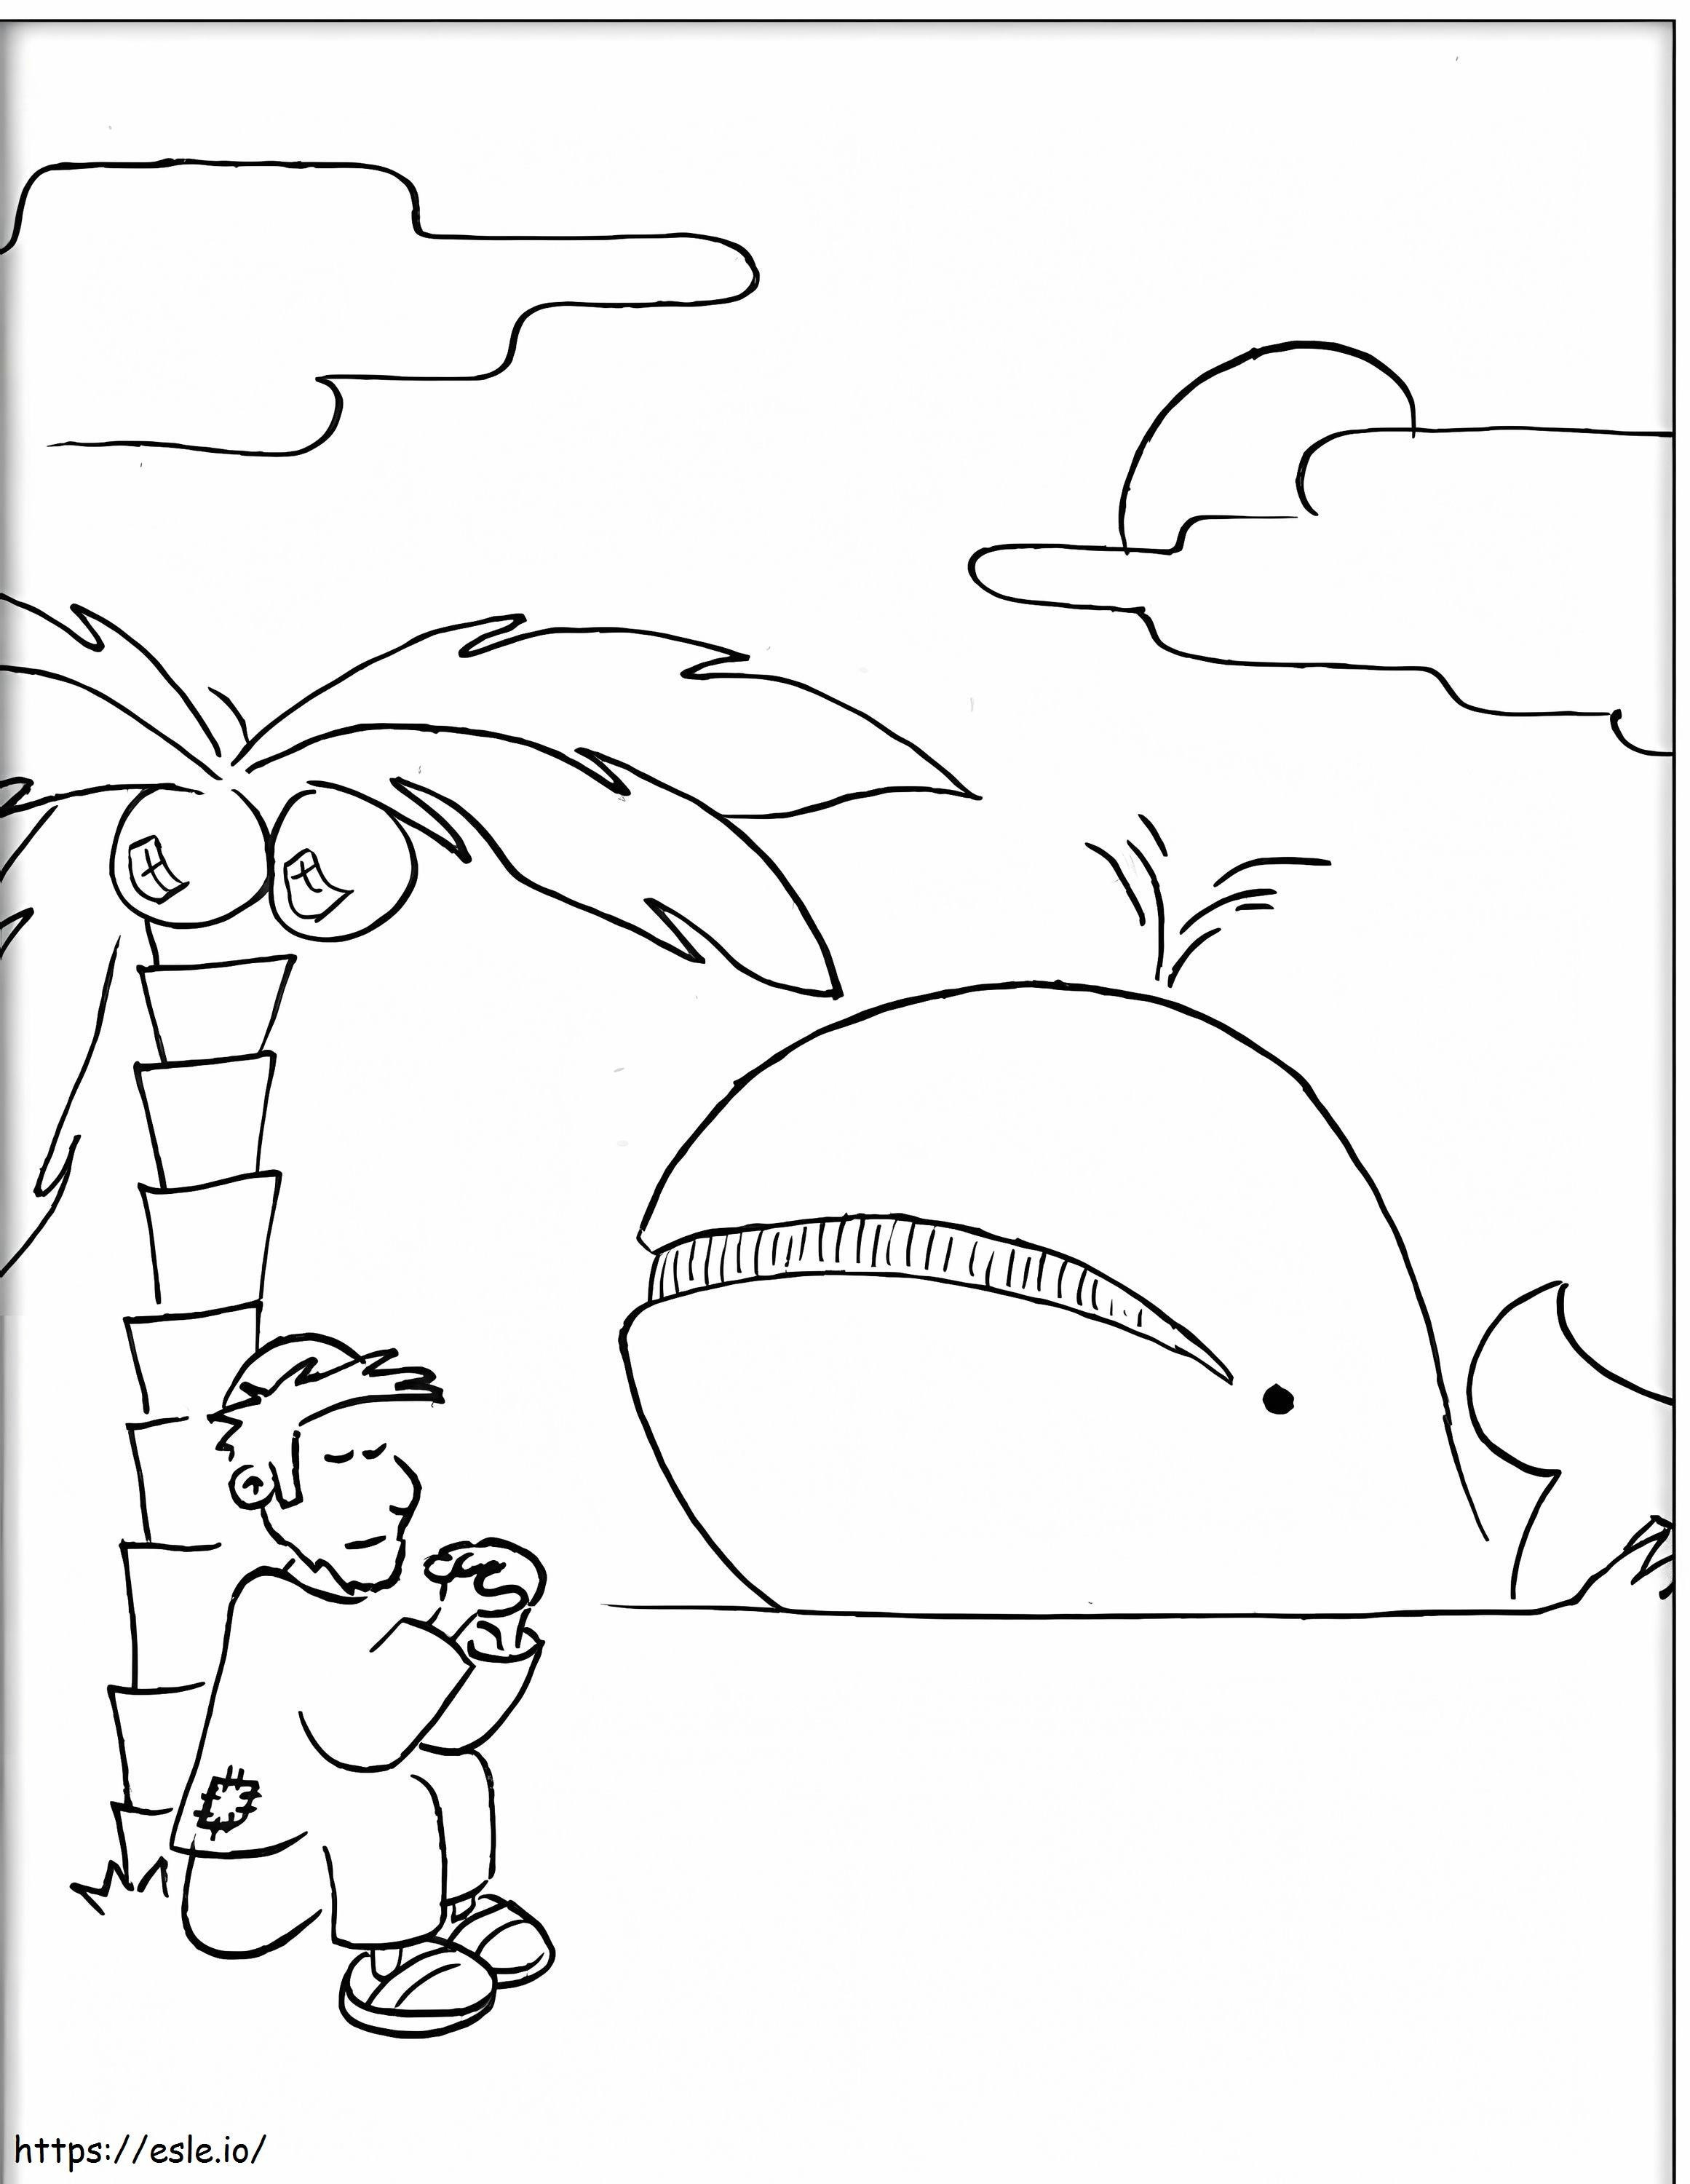 Jonas e a baleia 9 para colorir